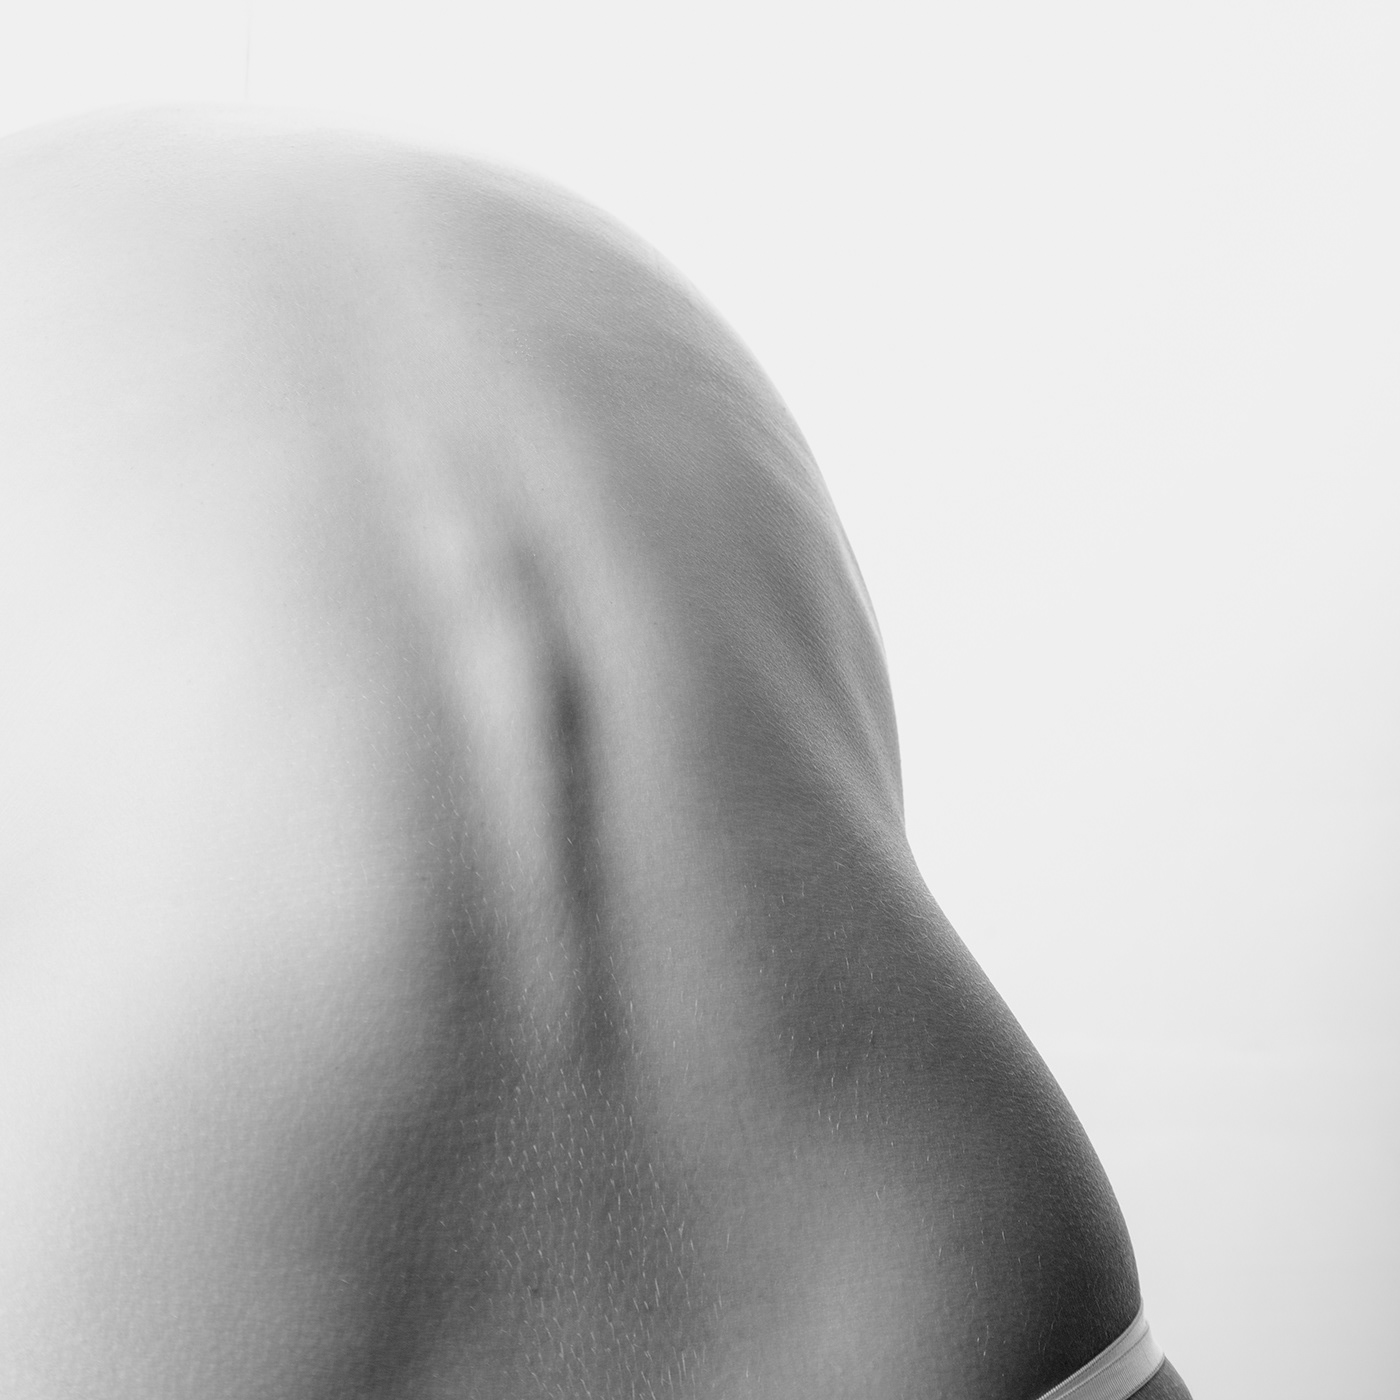 black and white White lines body closeup touching woman